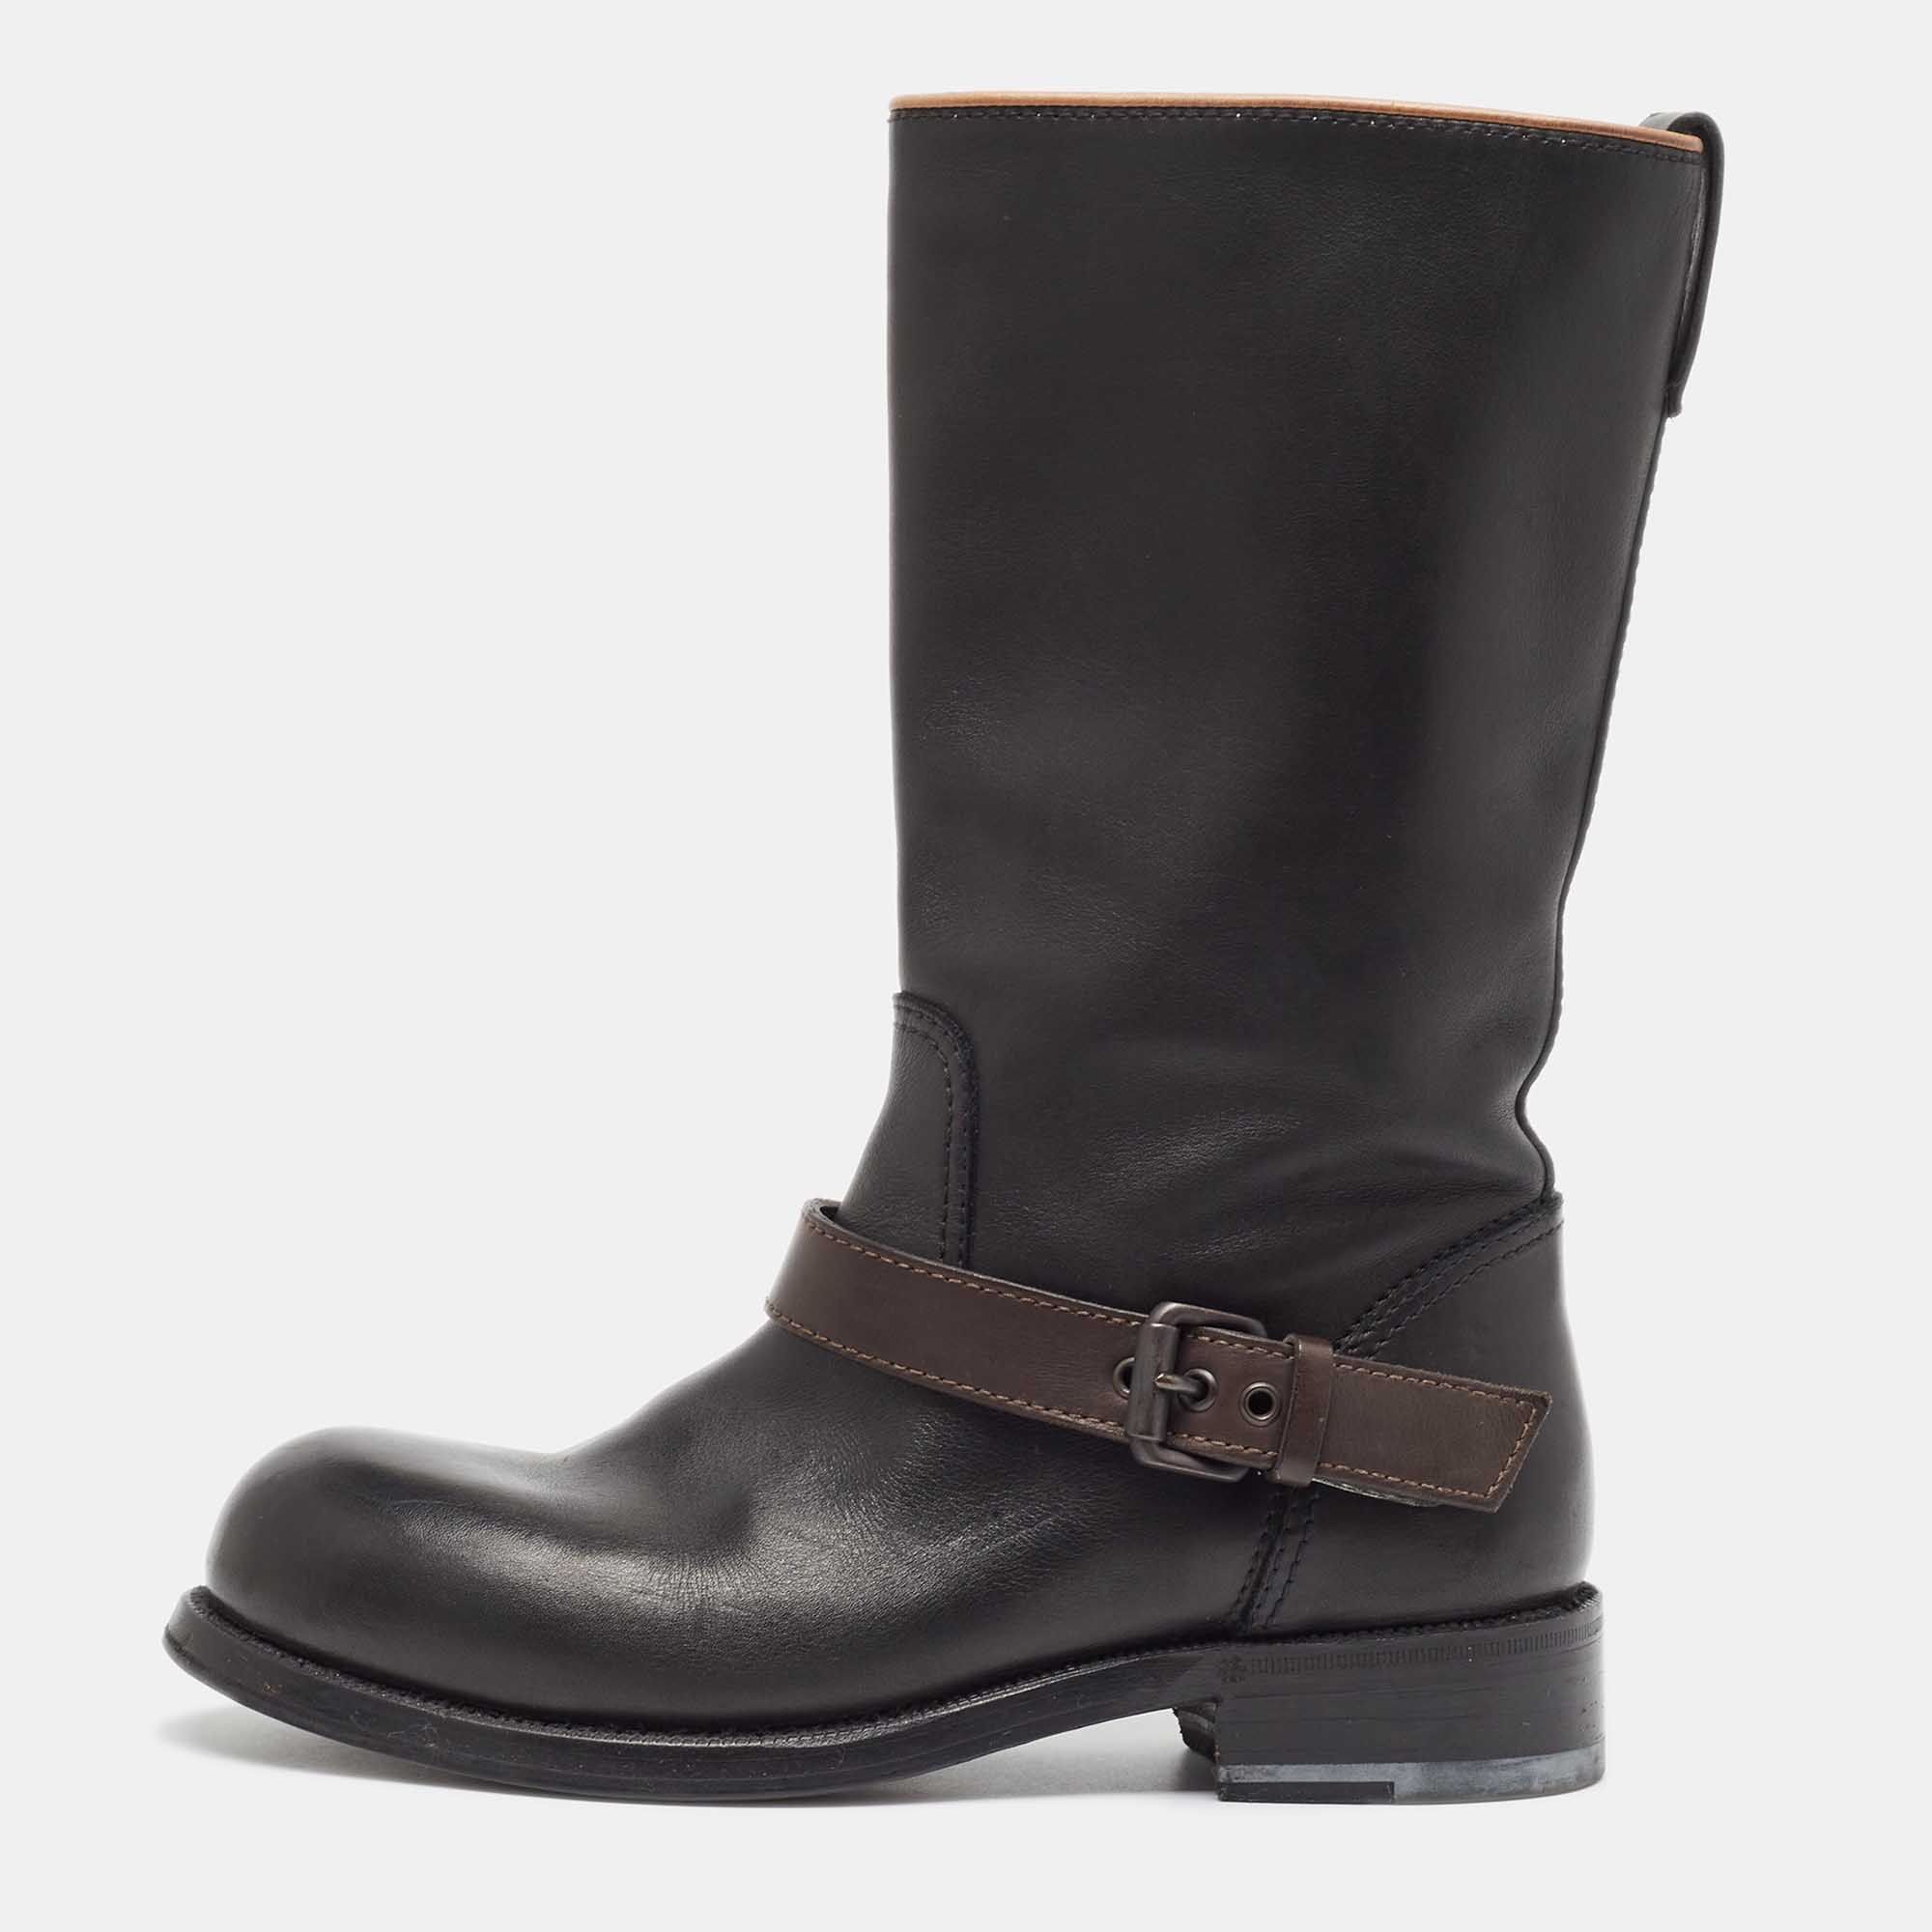 Bottega veneta black/brown leather buckle detail mid calf boots size 36.5